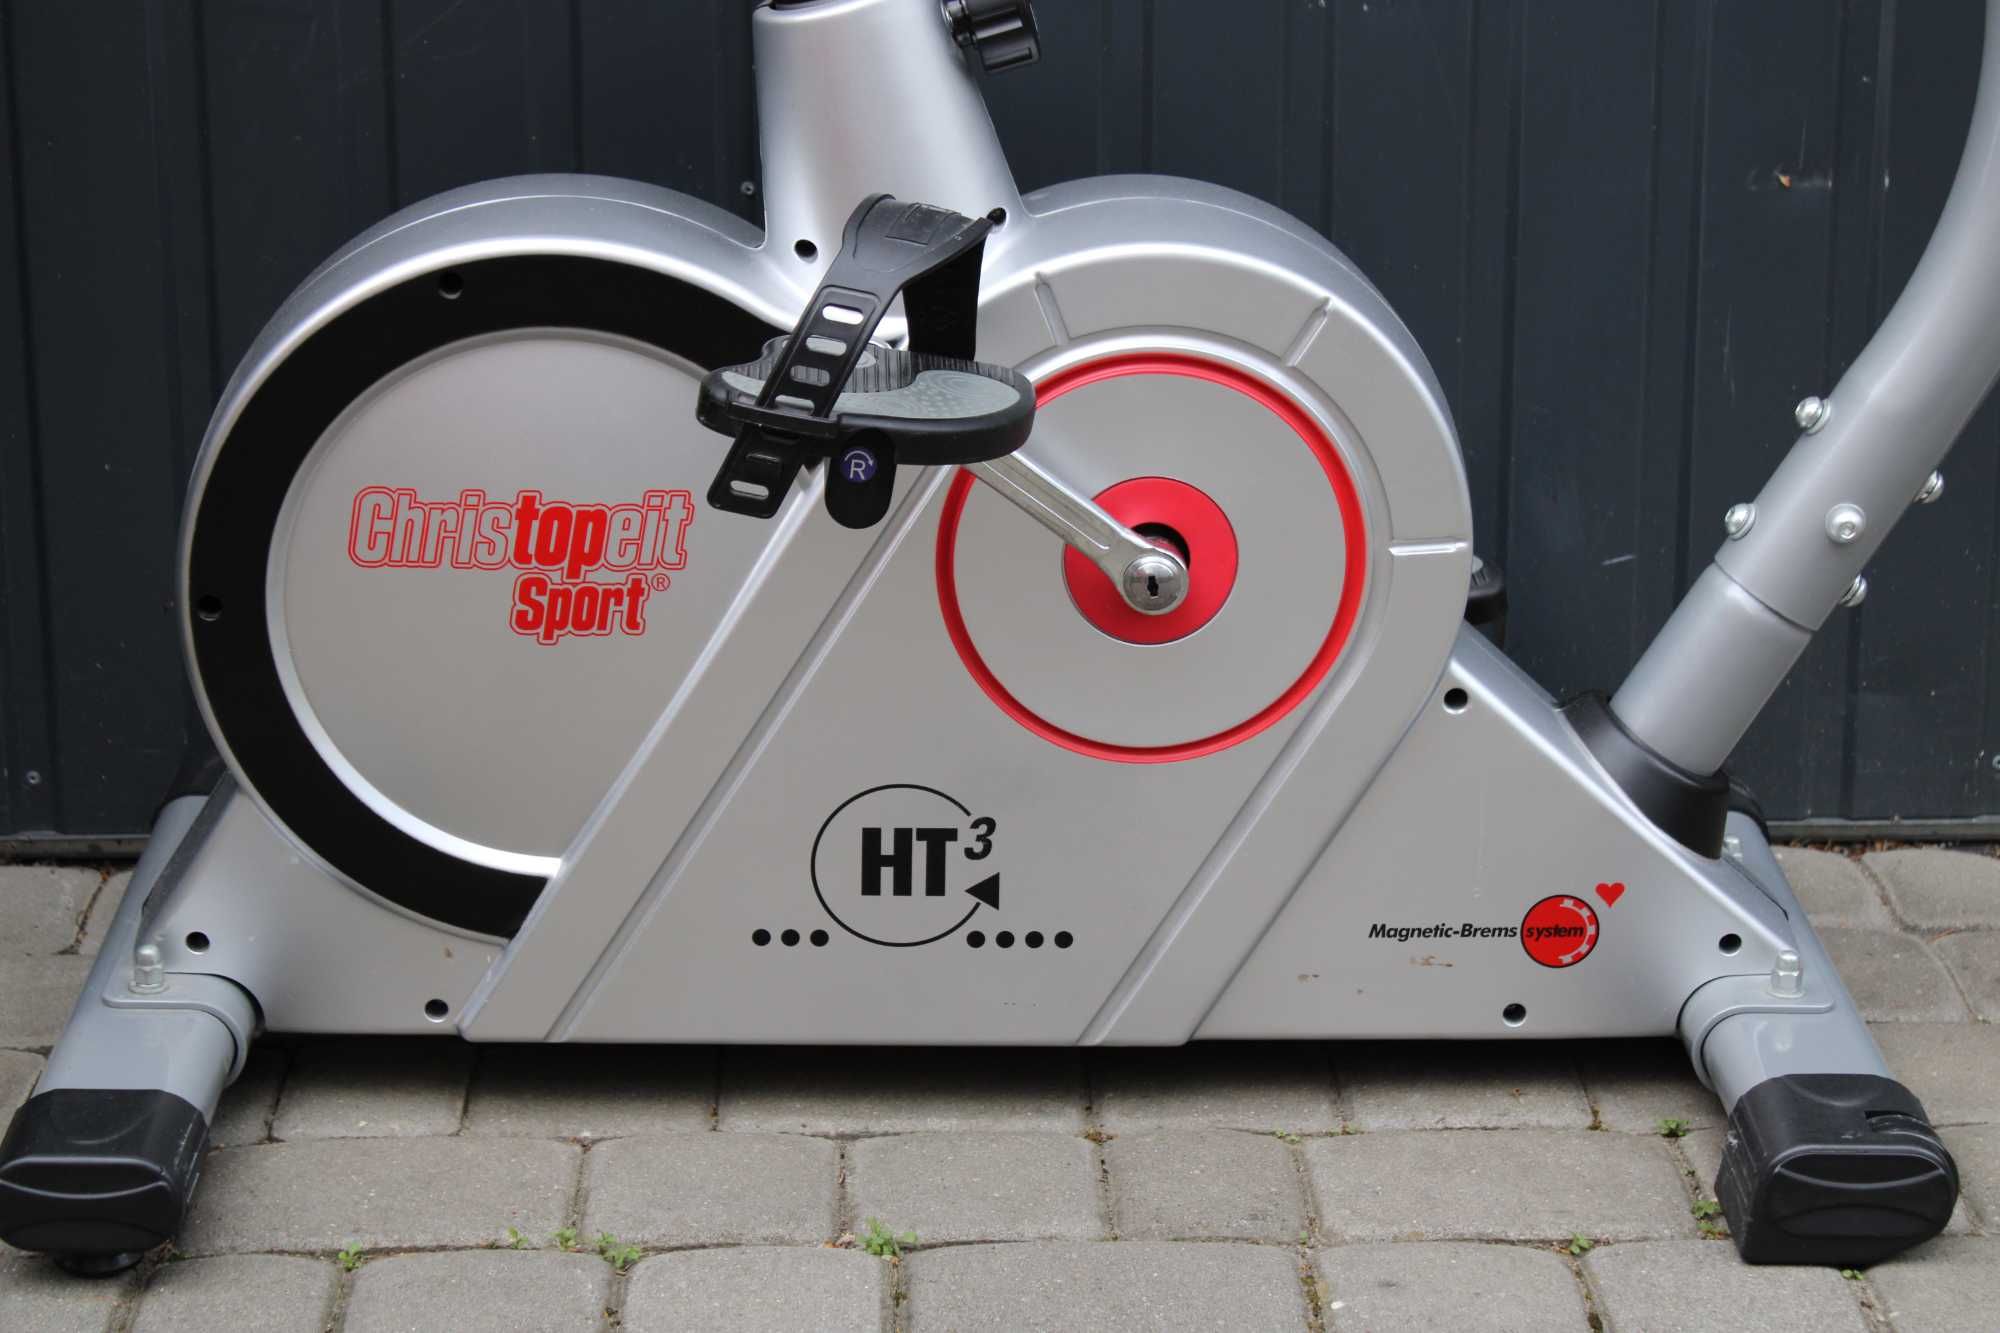 Rowerek magnetyczny Christopeit Sport HT3 stacjonarny treningowy